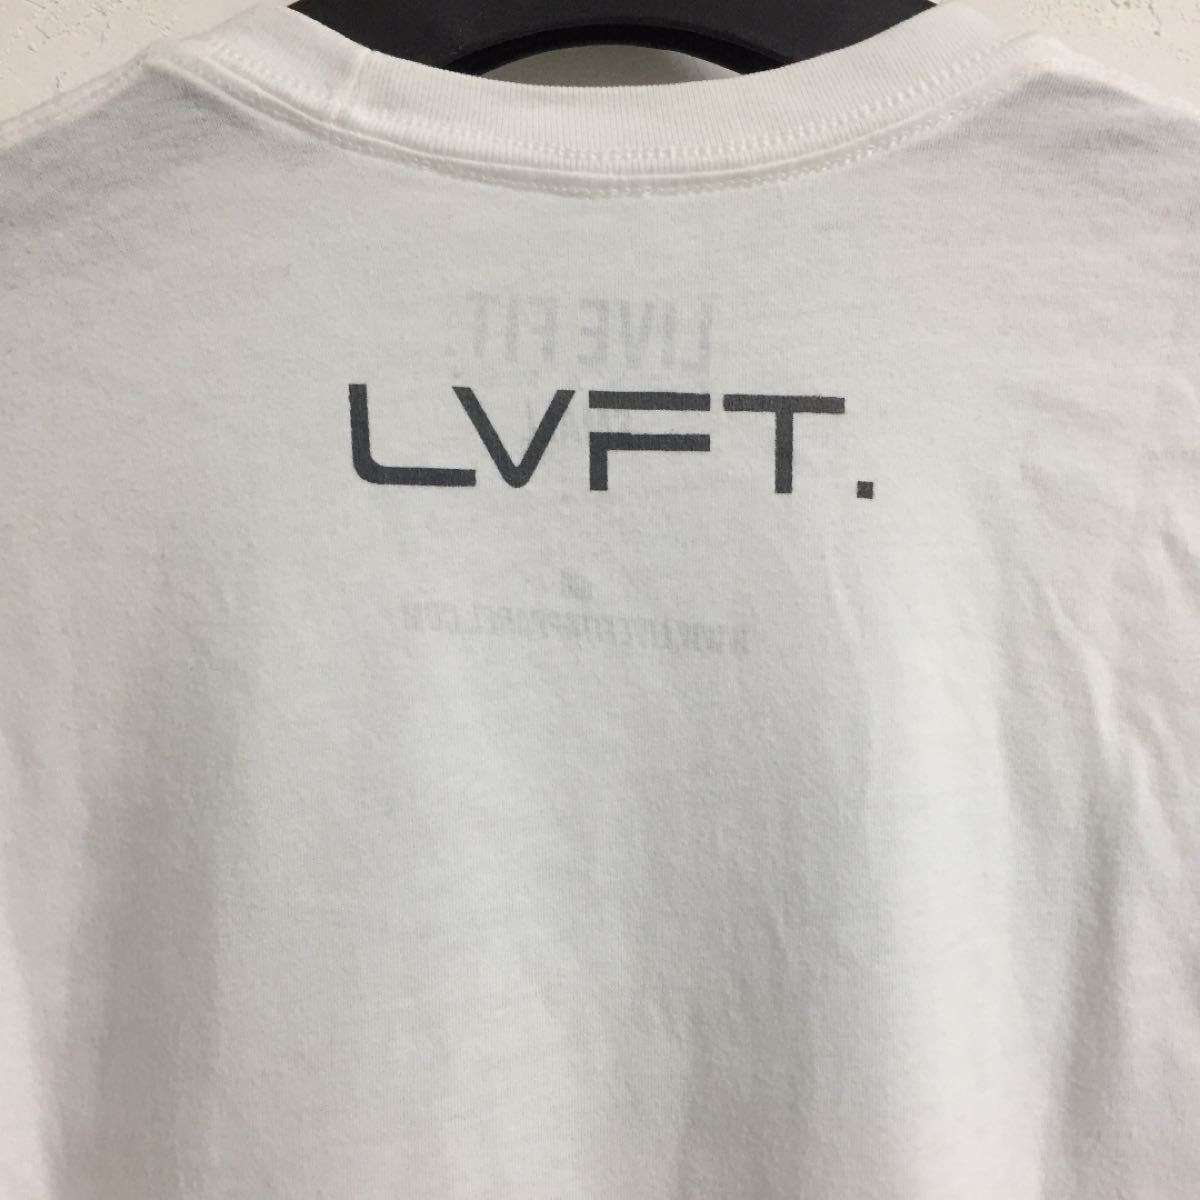 LIVE FIT LVFT Tシャツ メンズ Sサイズ ホワイト 白